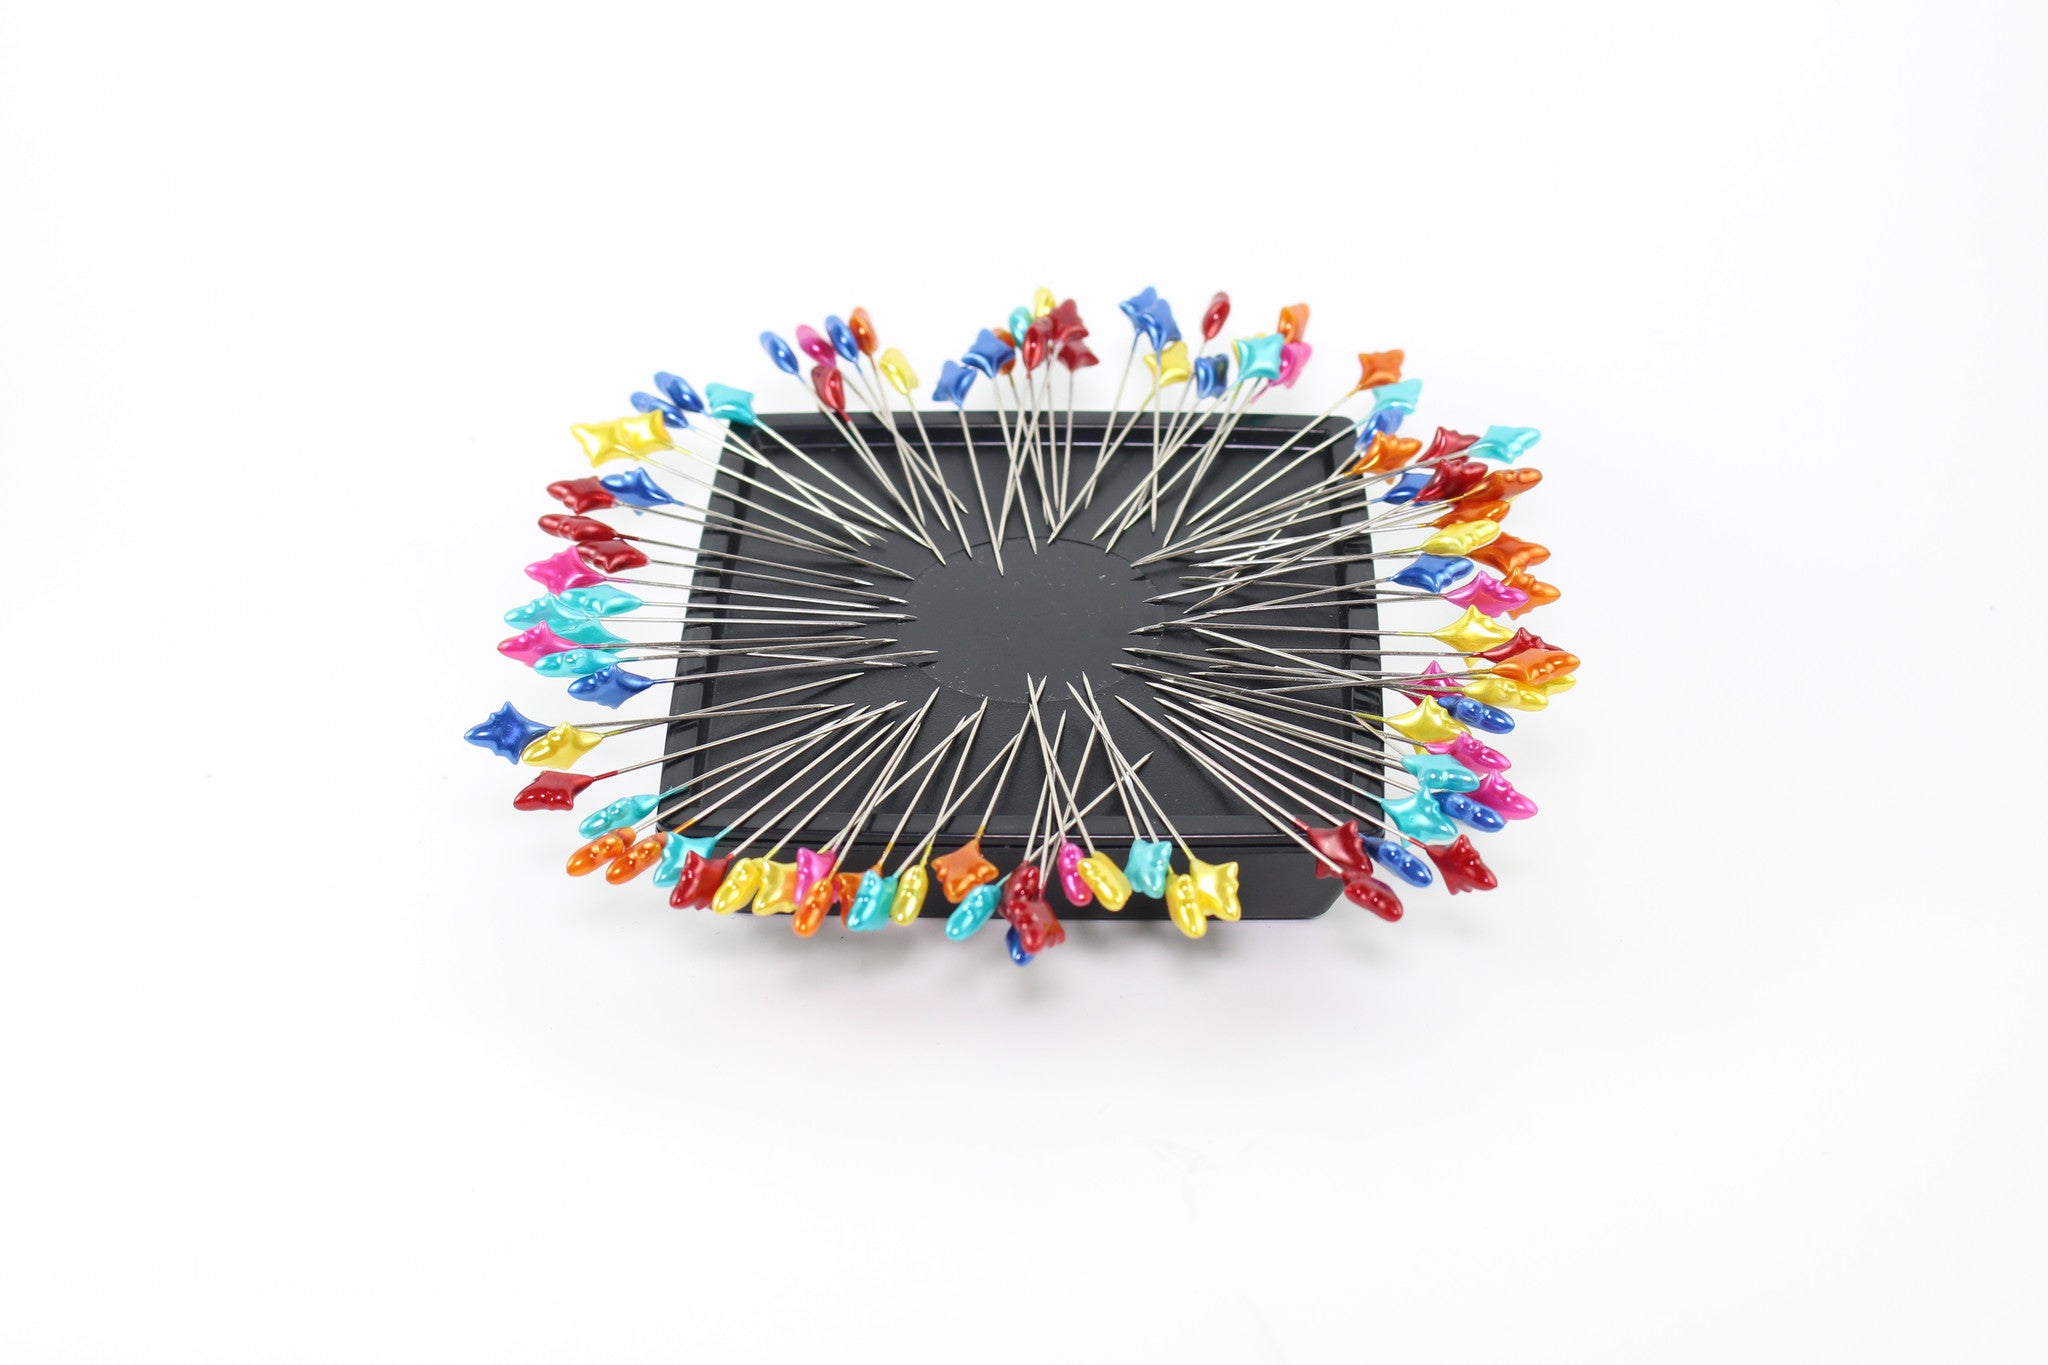 ZIRKEL Magnetic Pin Cushion ZMOR-TUR – The Sewing Studio Fabric